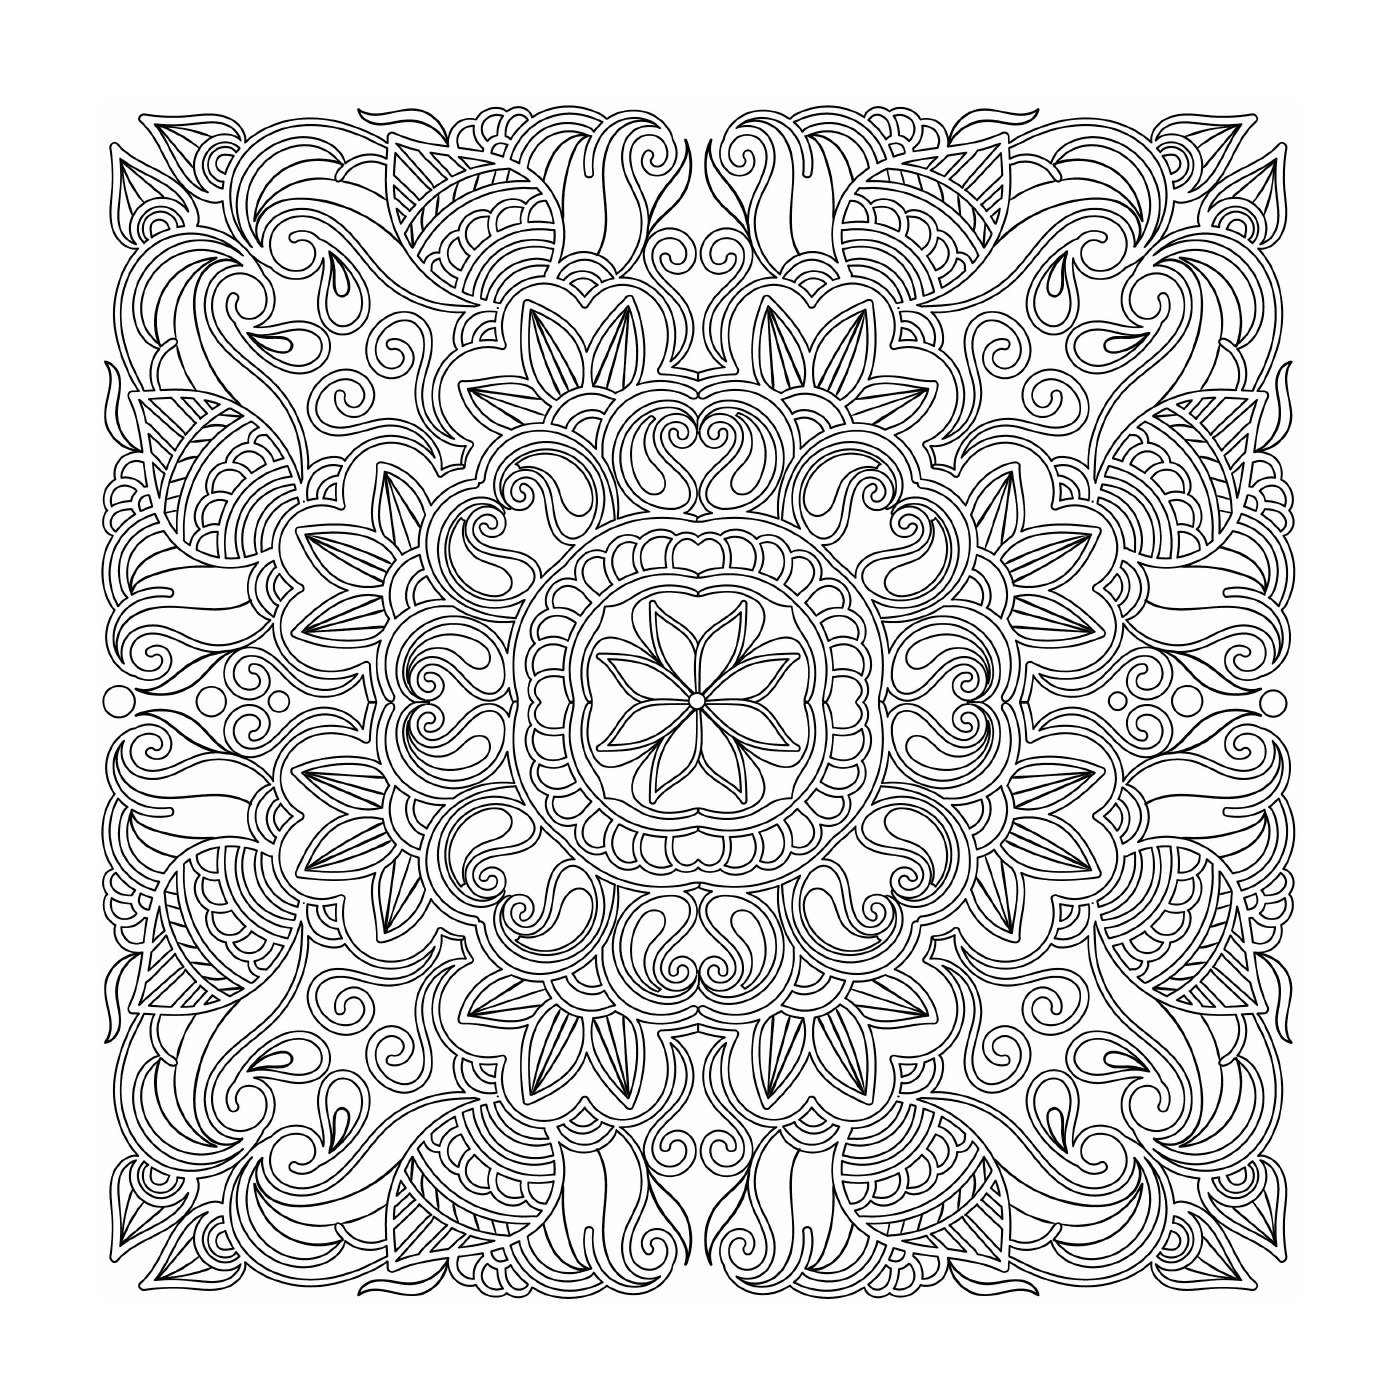  Mandala - Complejo Doodle 